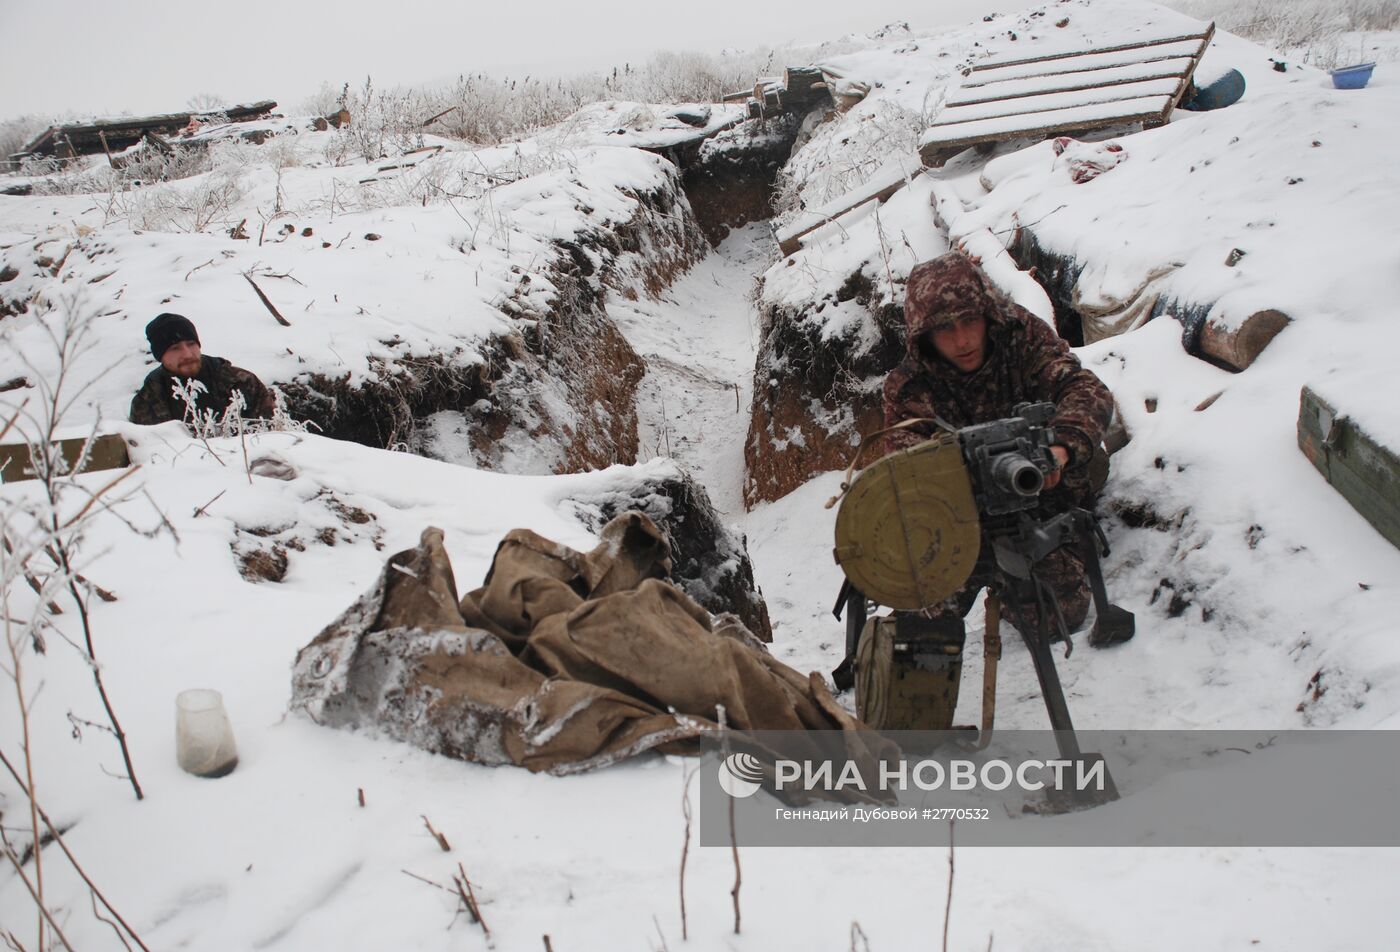 Бойцы ополчения ДНР на линии разграничения